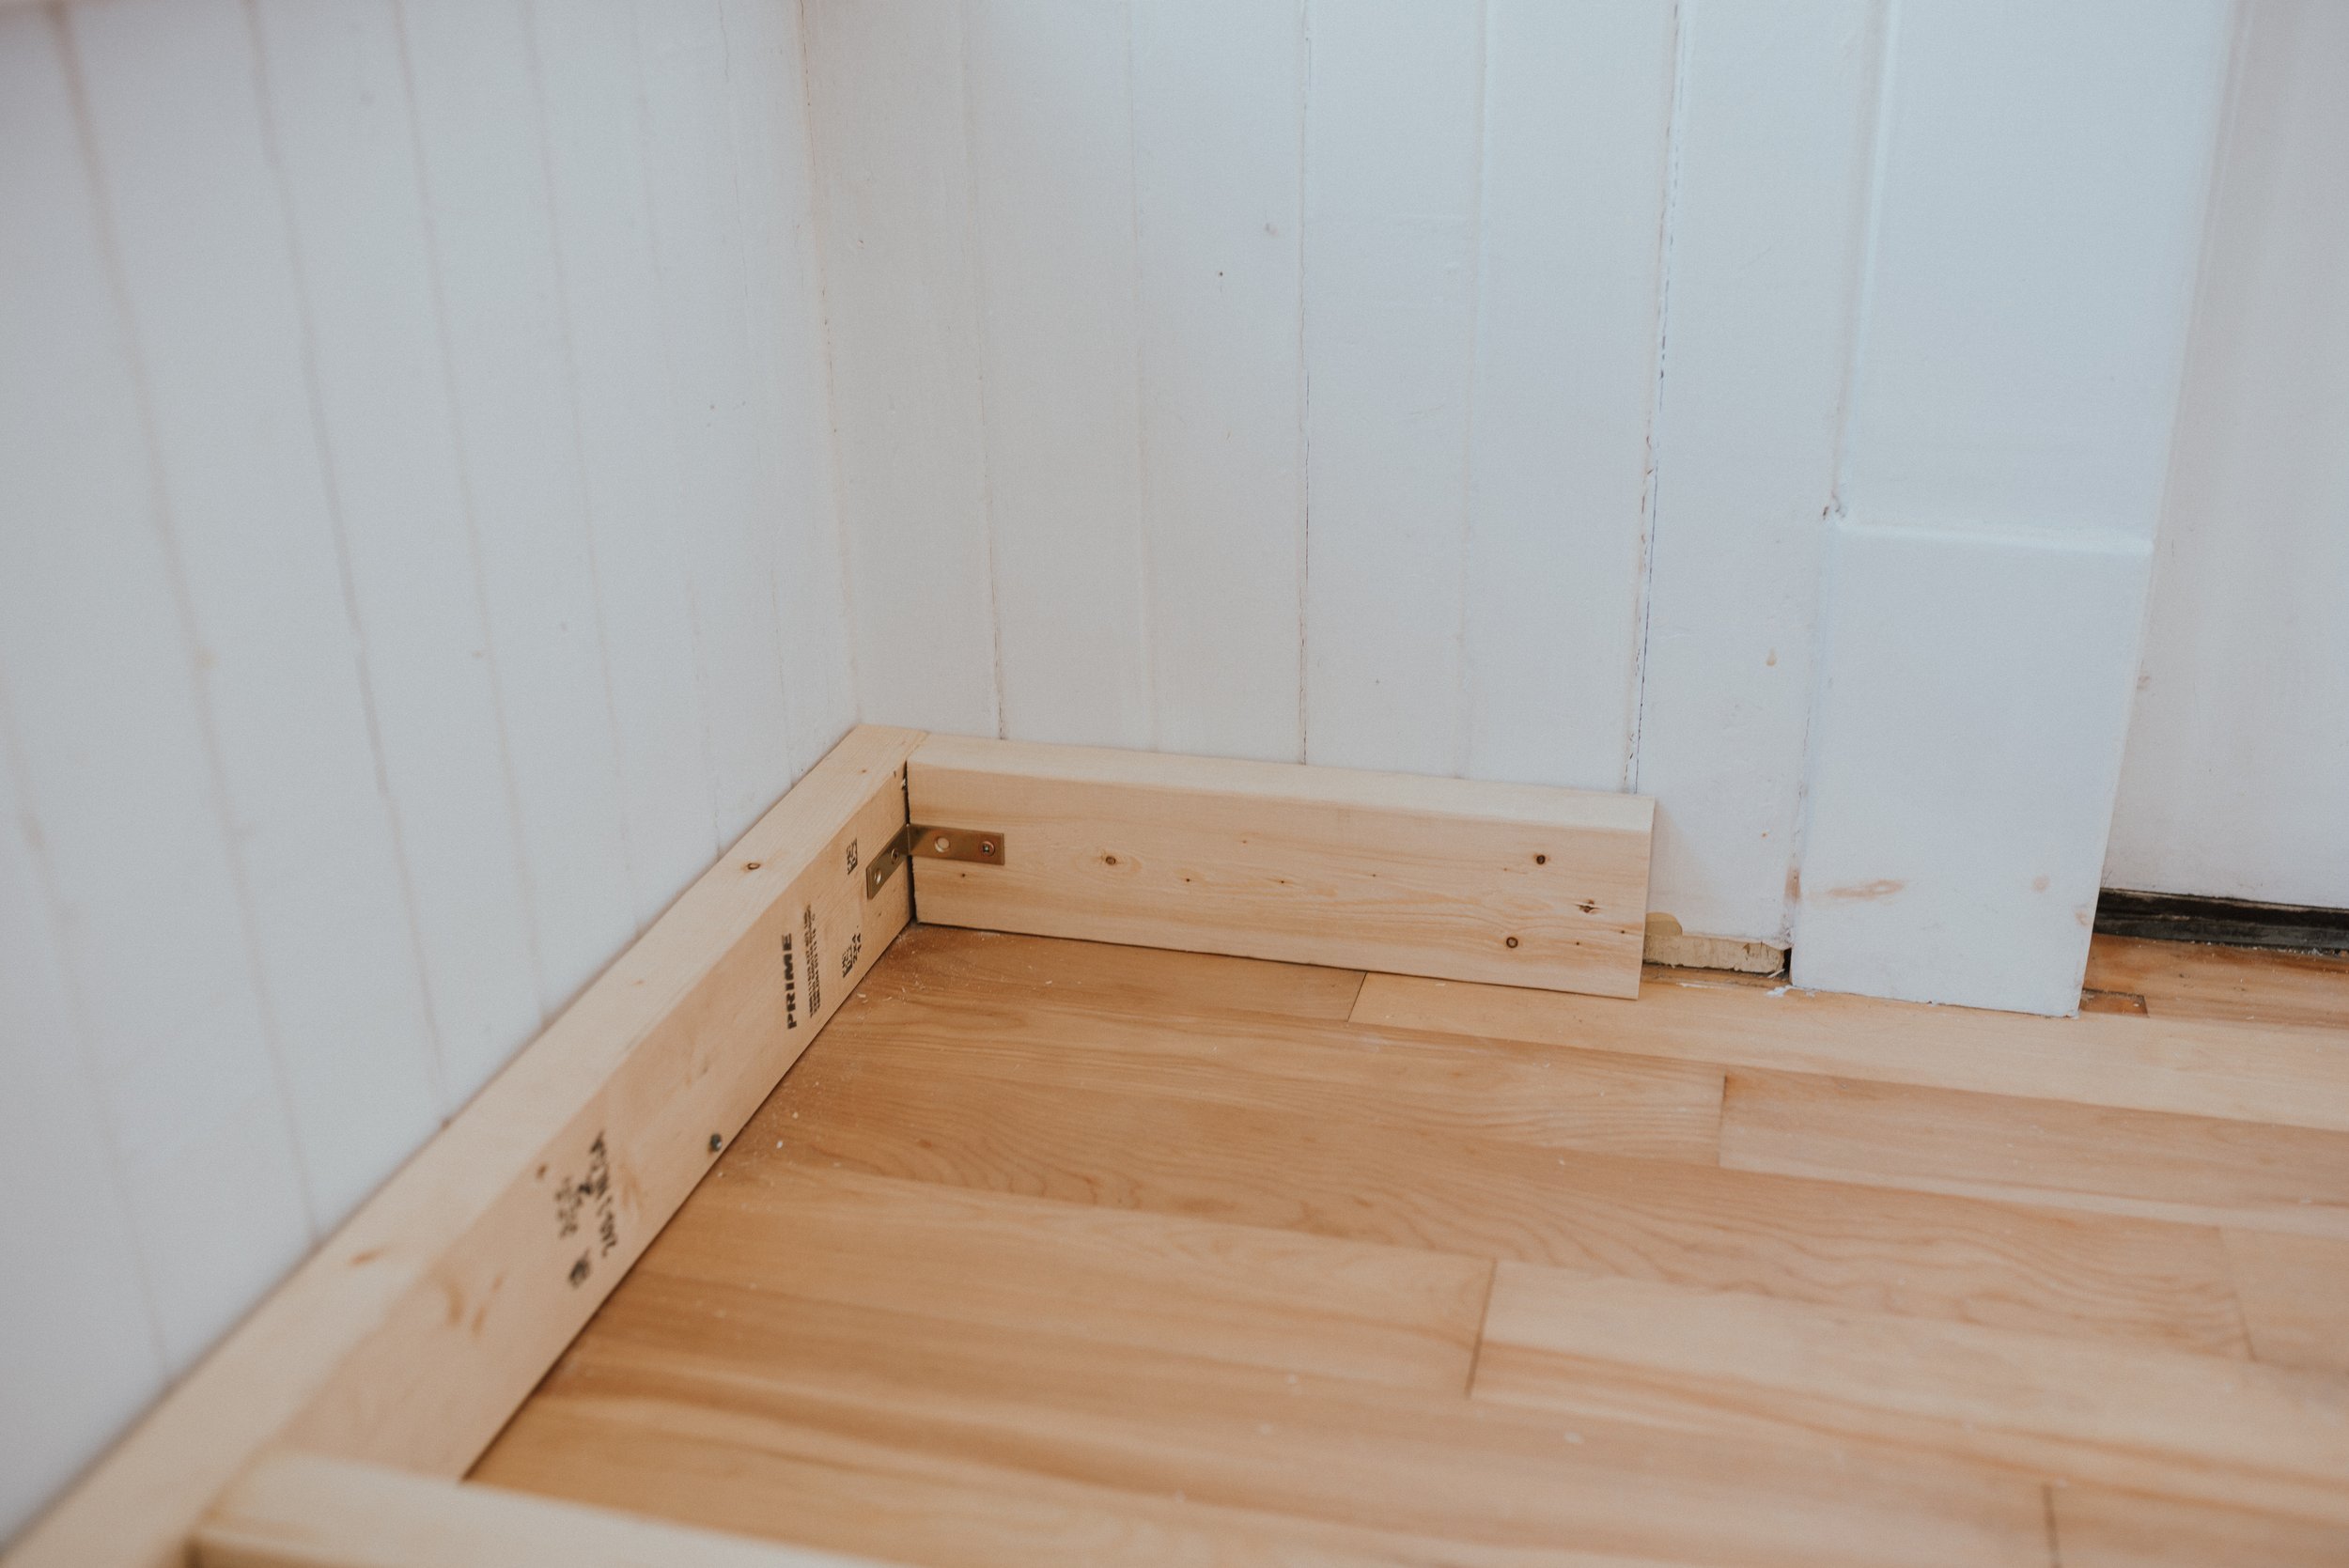 THe Wild Decoelis | DIY Built In Bench | Alexandria Moulding | reinforcing corners with brackes